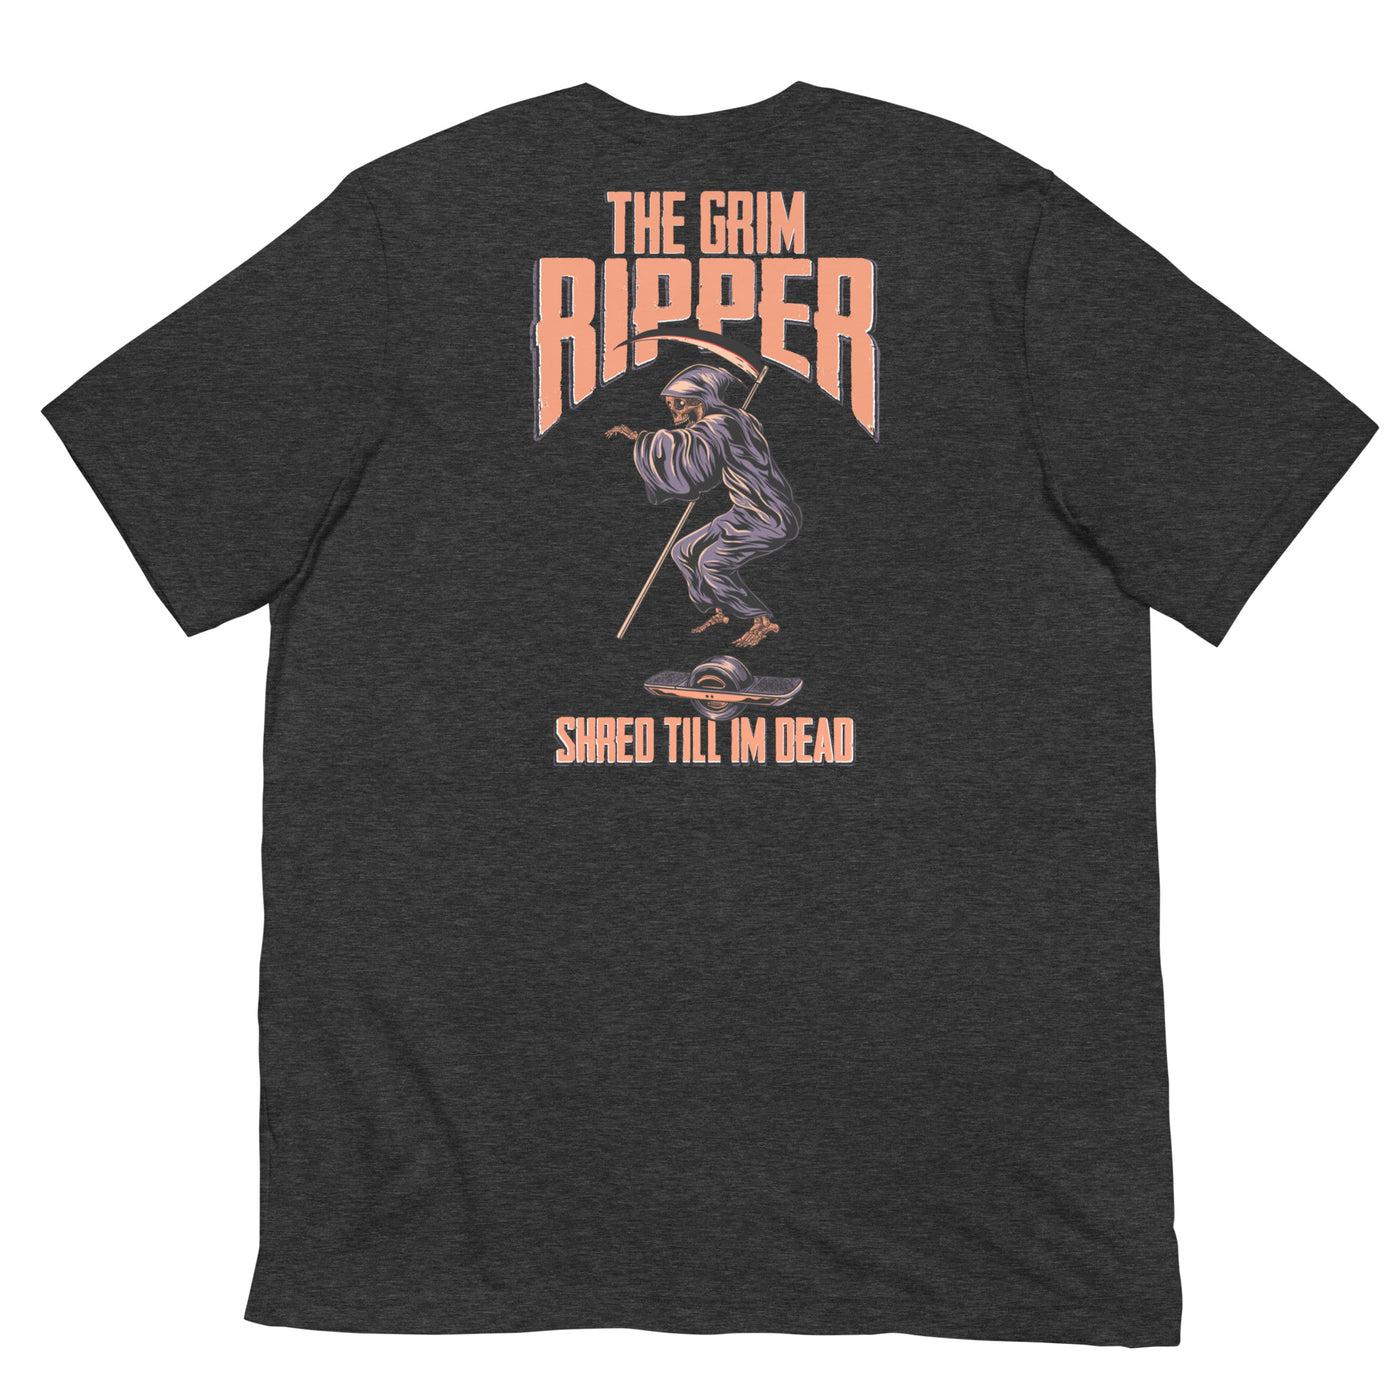 The Grim Ripper Shirt